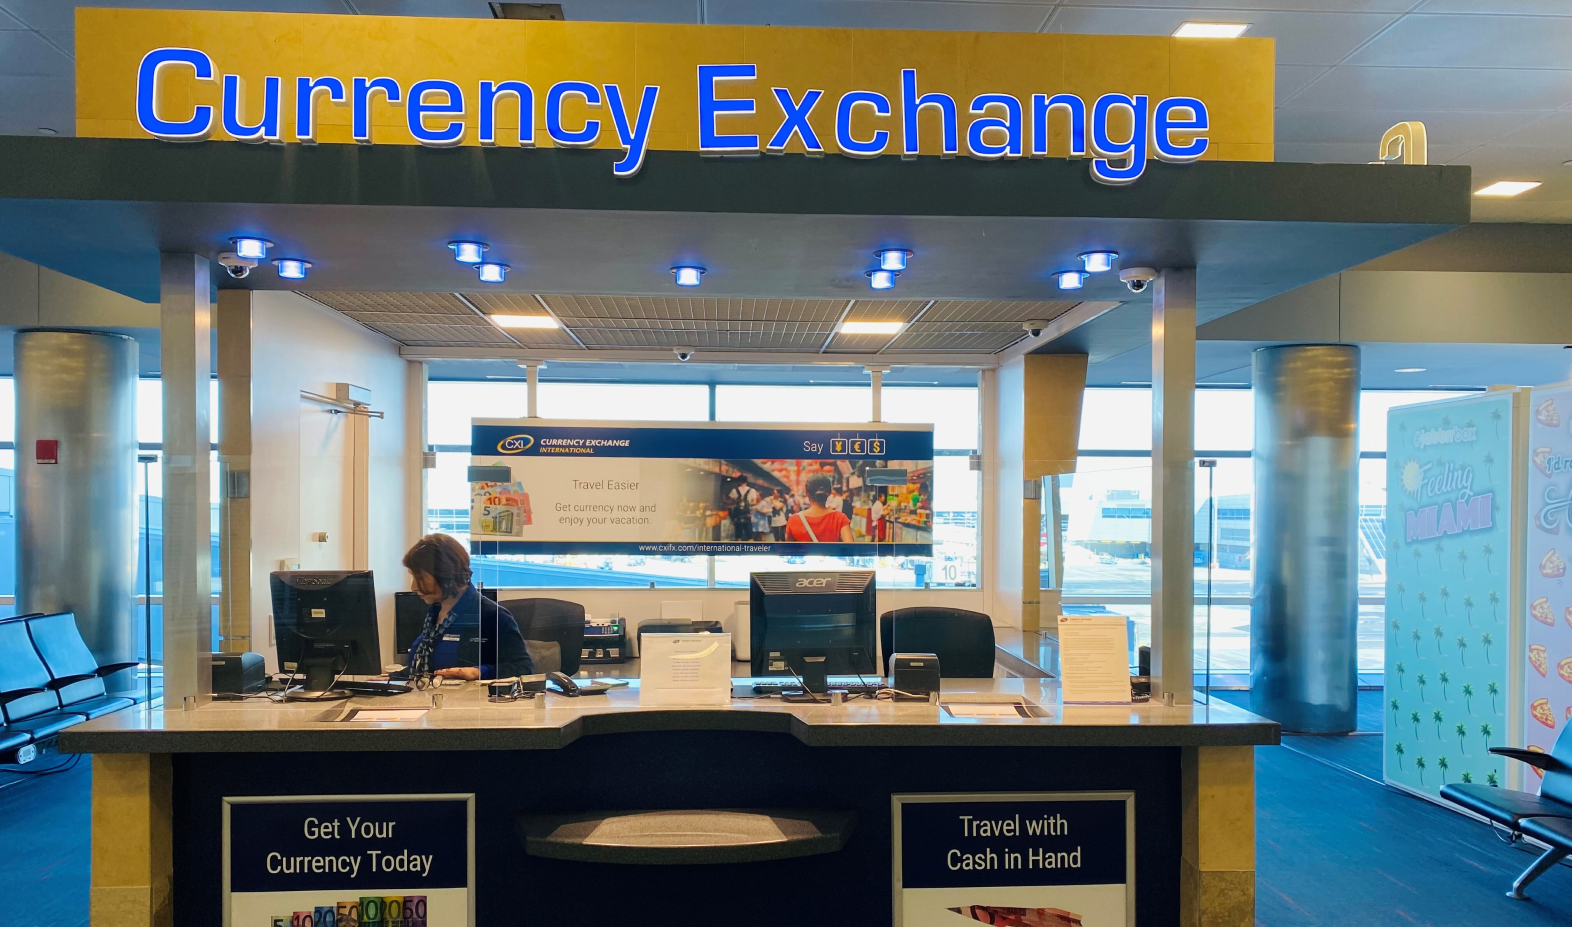 CURRENCY EXCHANGE INTERNATIONAL - Jfk International Airport, Jamaica, New  York - Currency Exchange - Phone Number - Yelp